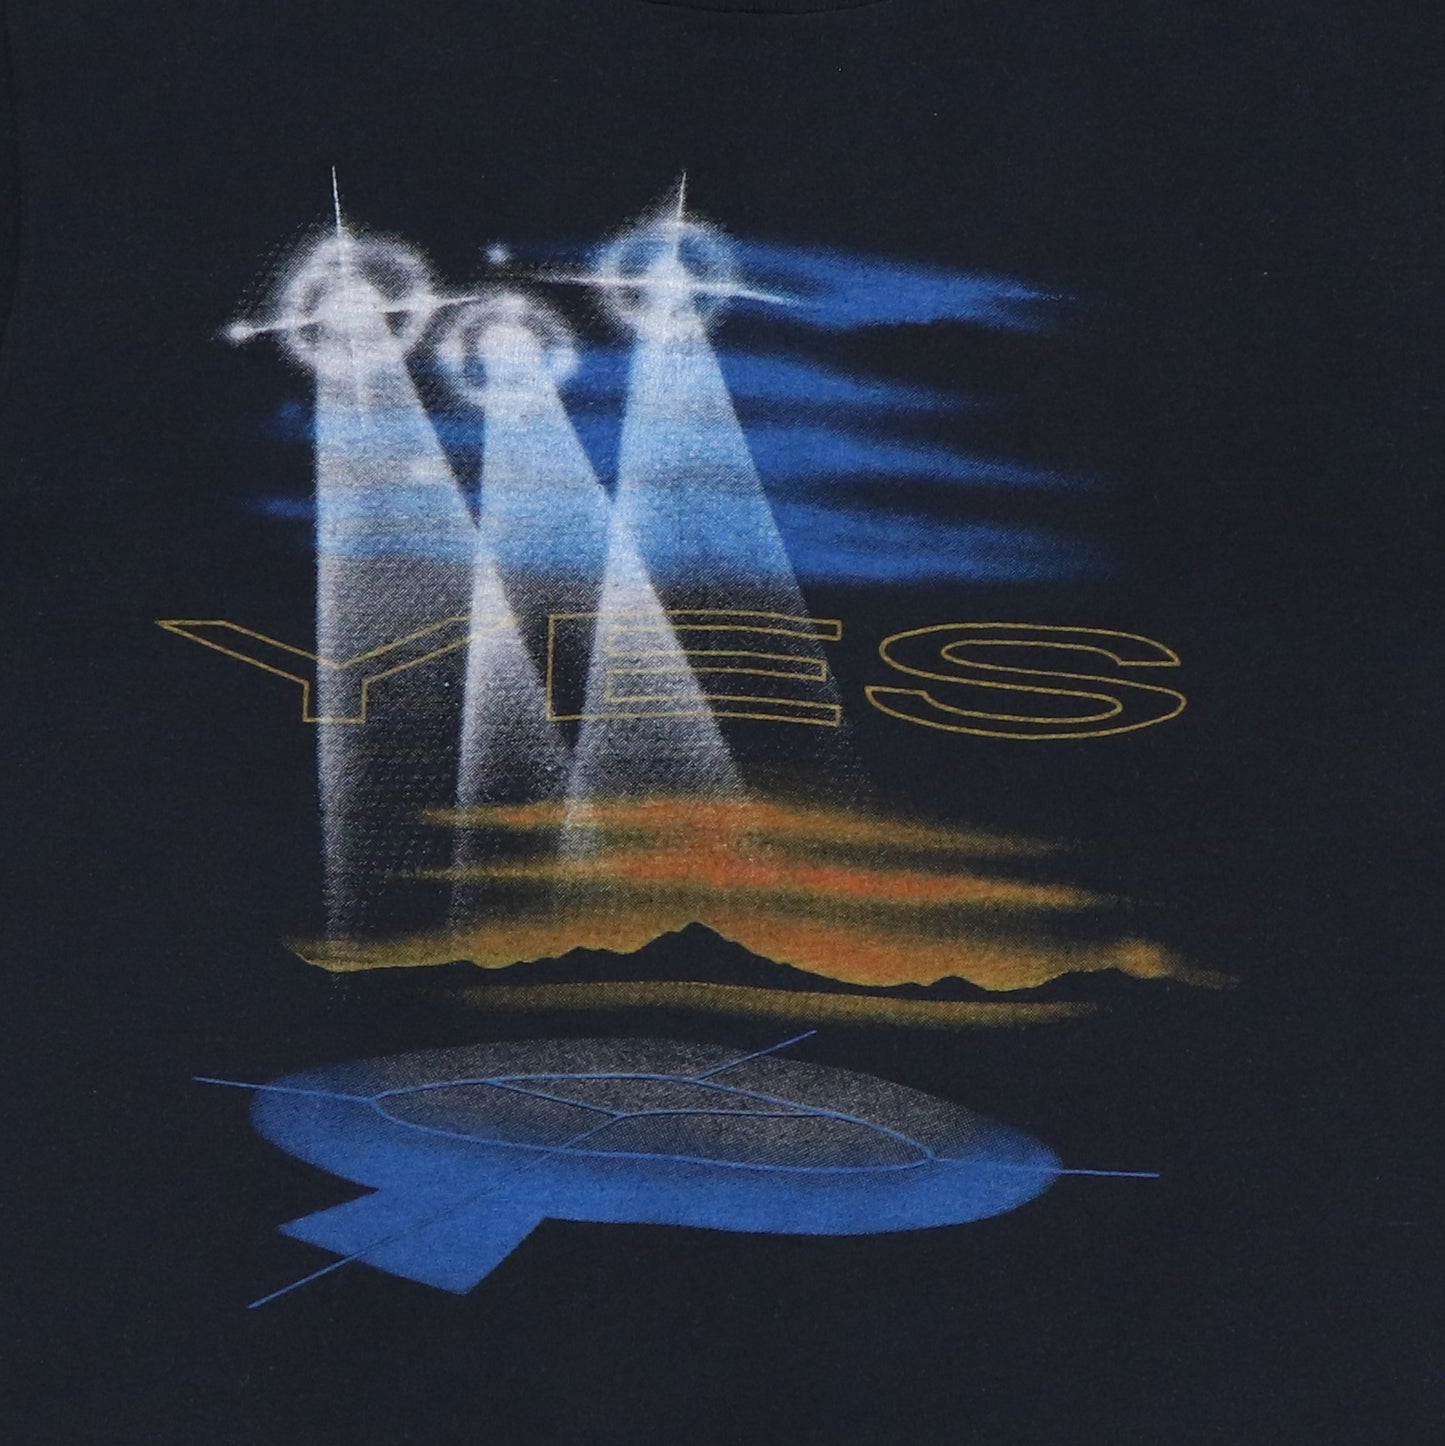 1984 Yes World Tour Shirt